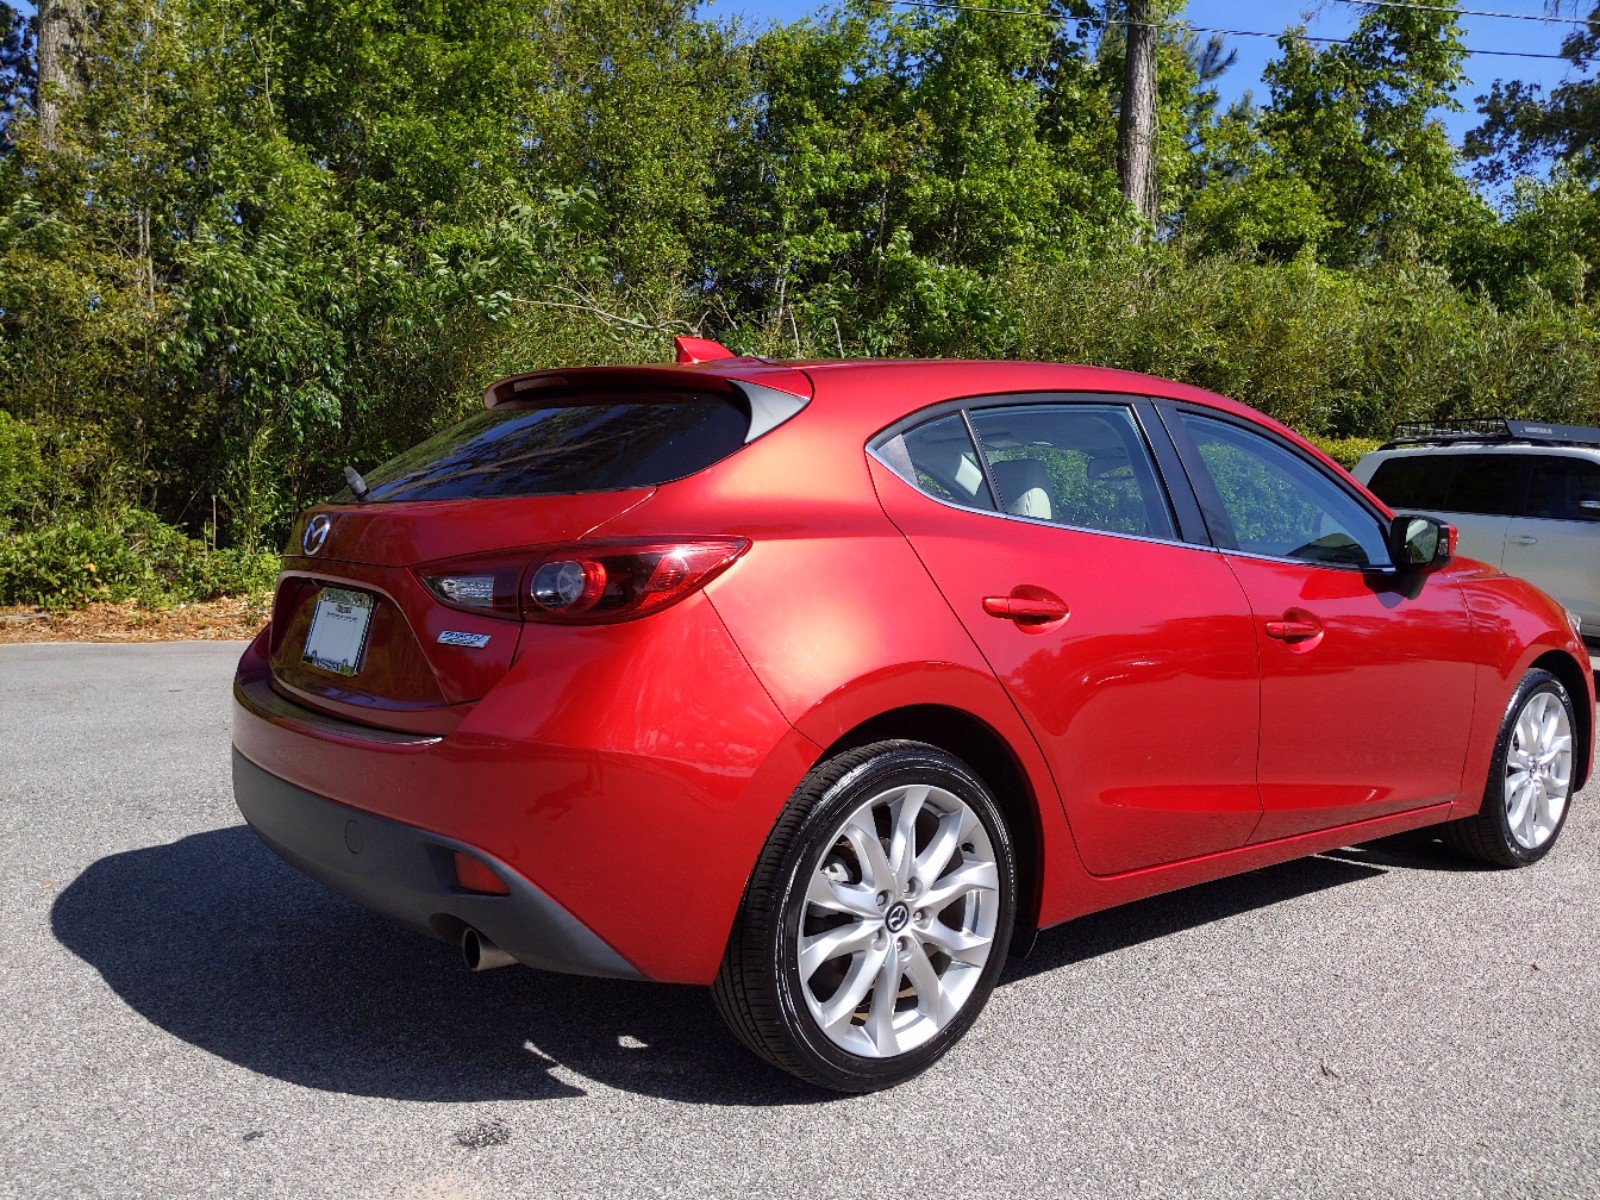 PreOwned 2014 Mazda Mazda3 s Grand Touring Hatchback in Savannah